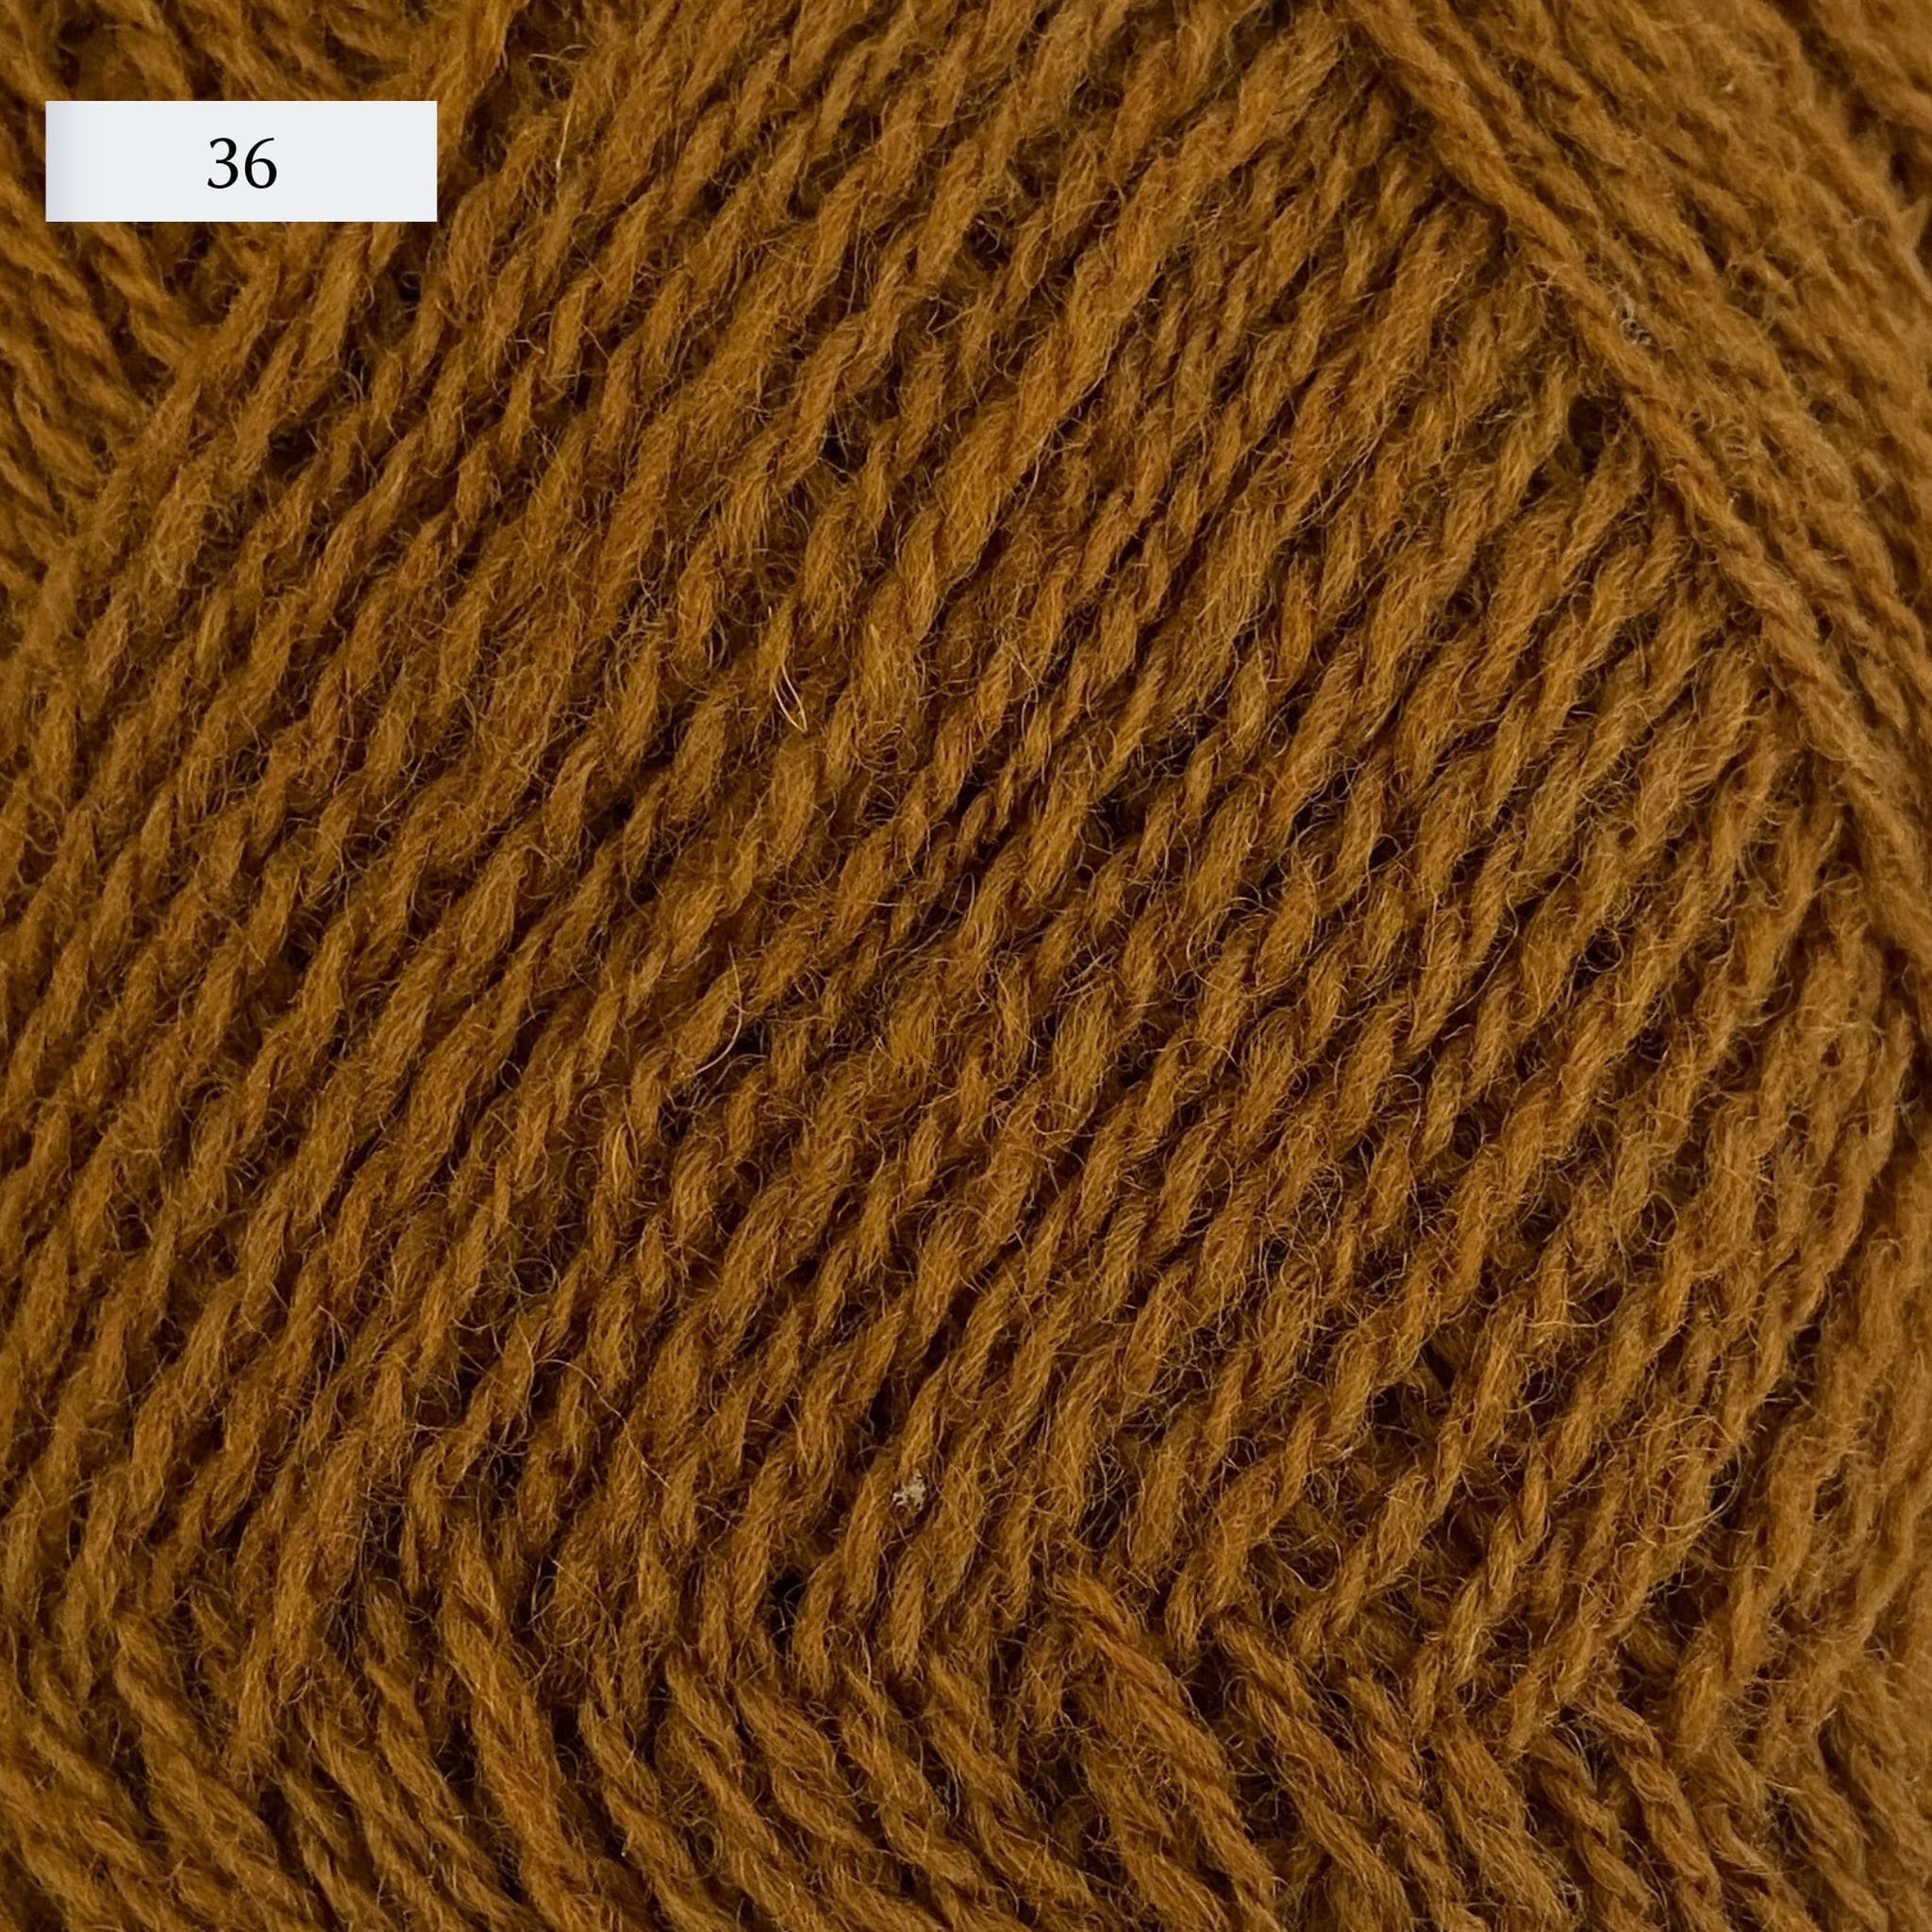 Rauma Lamullgarn, a fingering weight yarn, in color 36, a golden straw yellow-brown